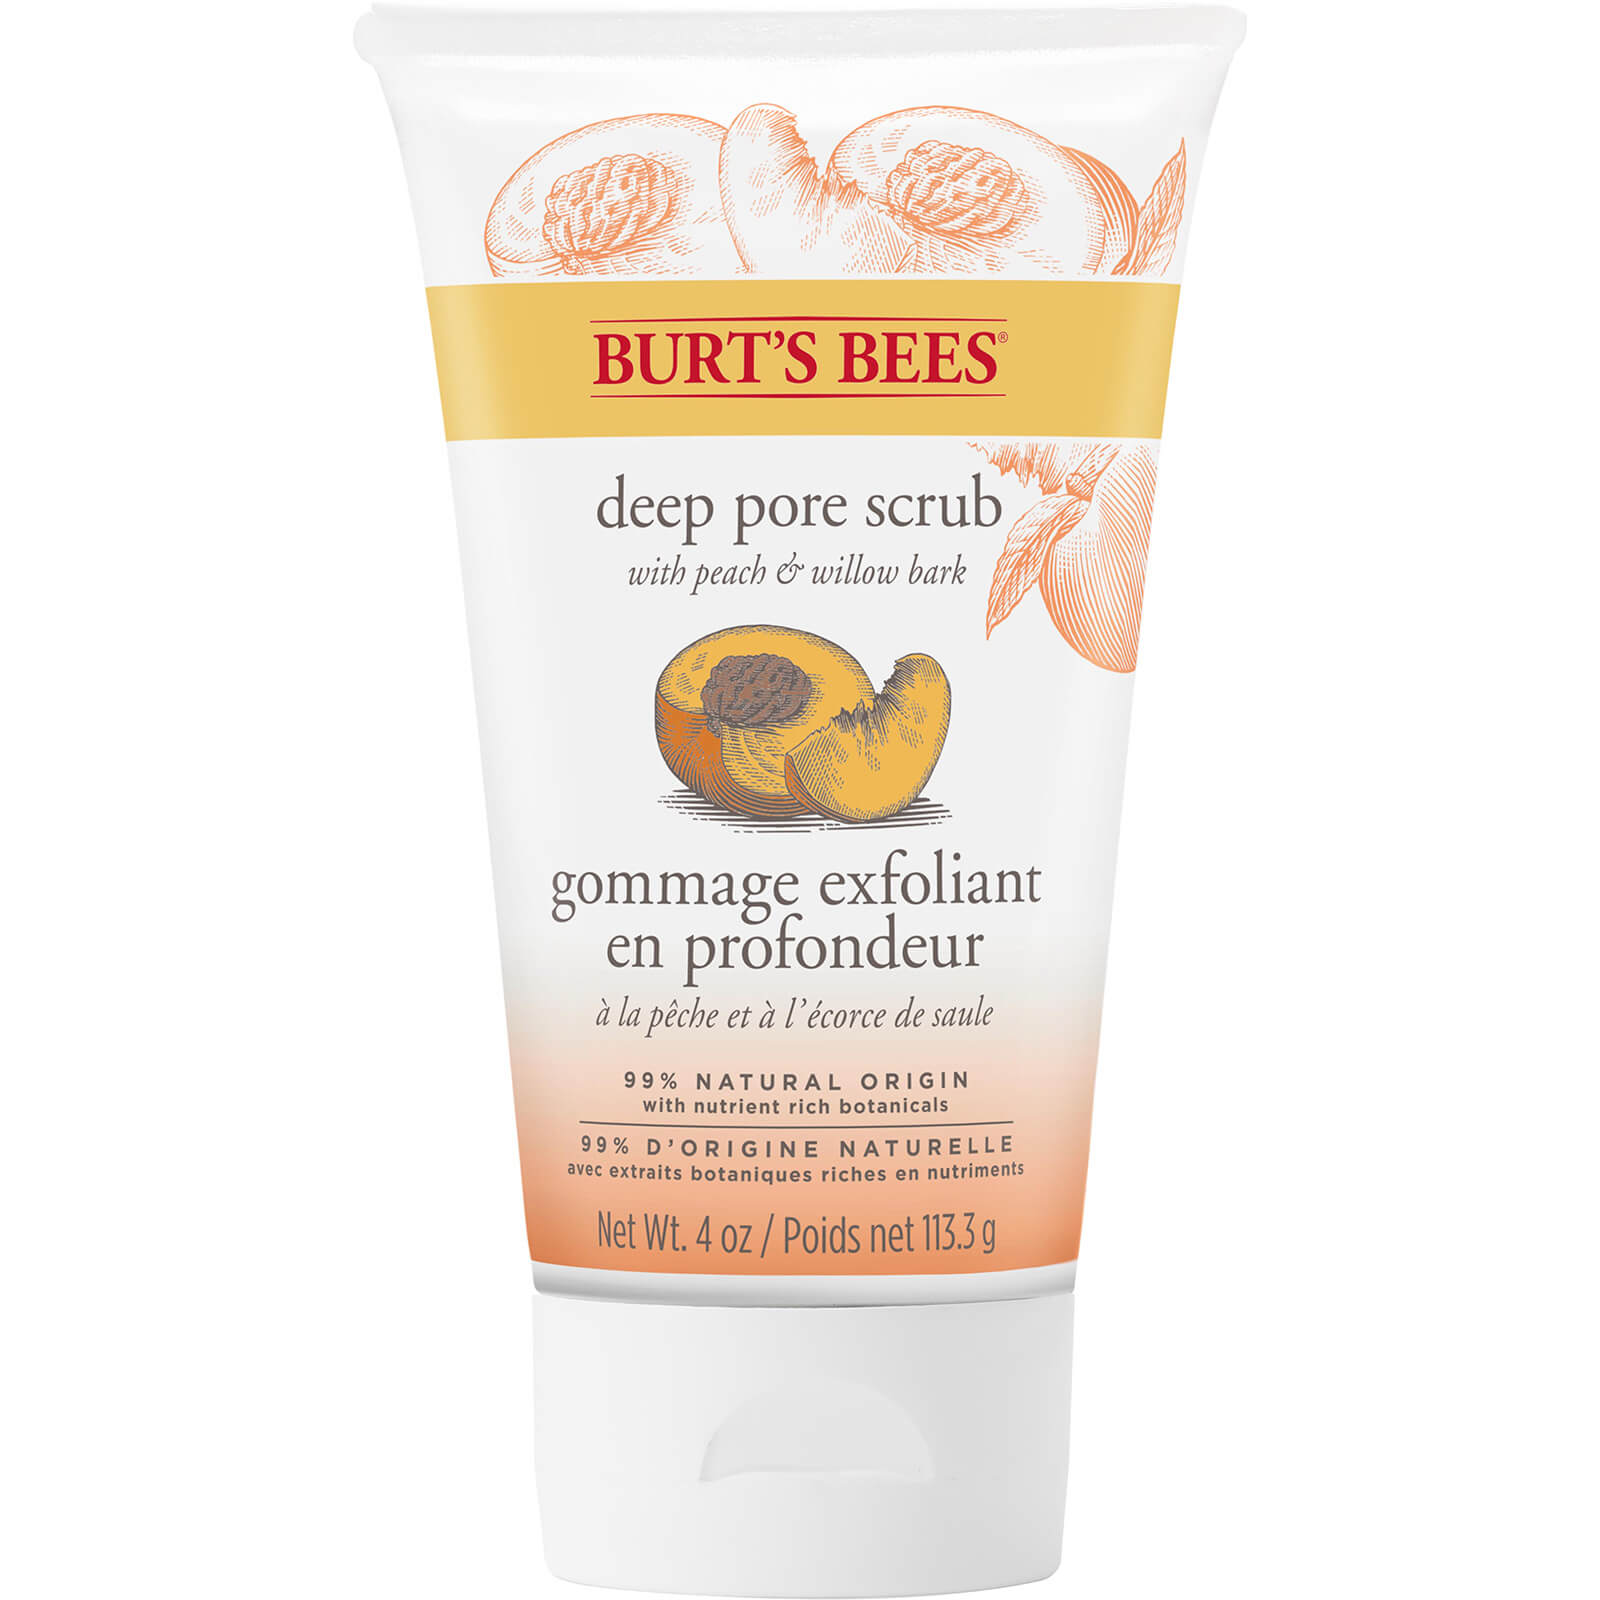 Photos - Facial / Body Cleansing Product Burts Bees Burt's Bees Peach & Willowbark Deep Pore Scrub  89100-14-1 (4 oz / 110g)